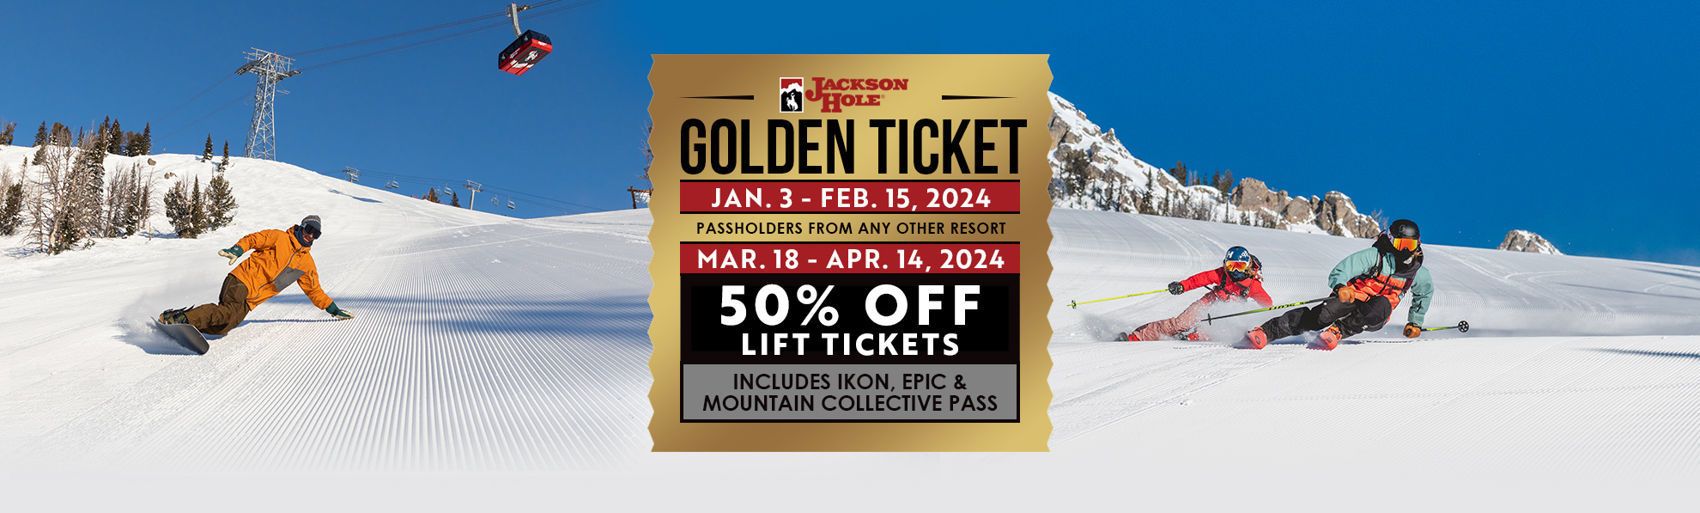 Golden Ticket dates